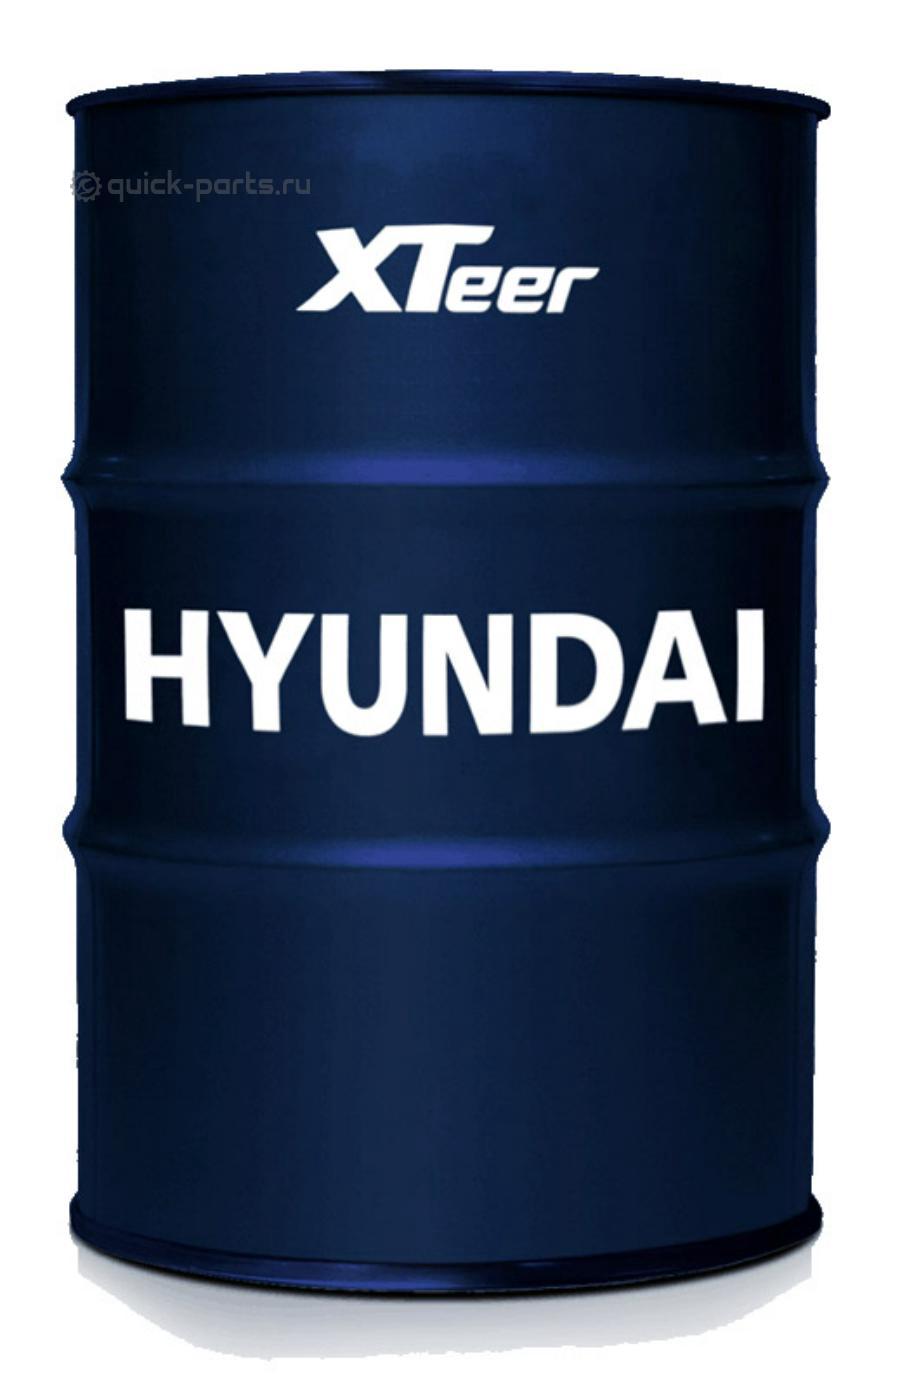 1200025 HYUNDAI-XTEER Моторное масло